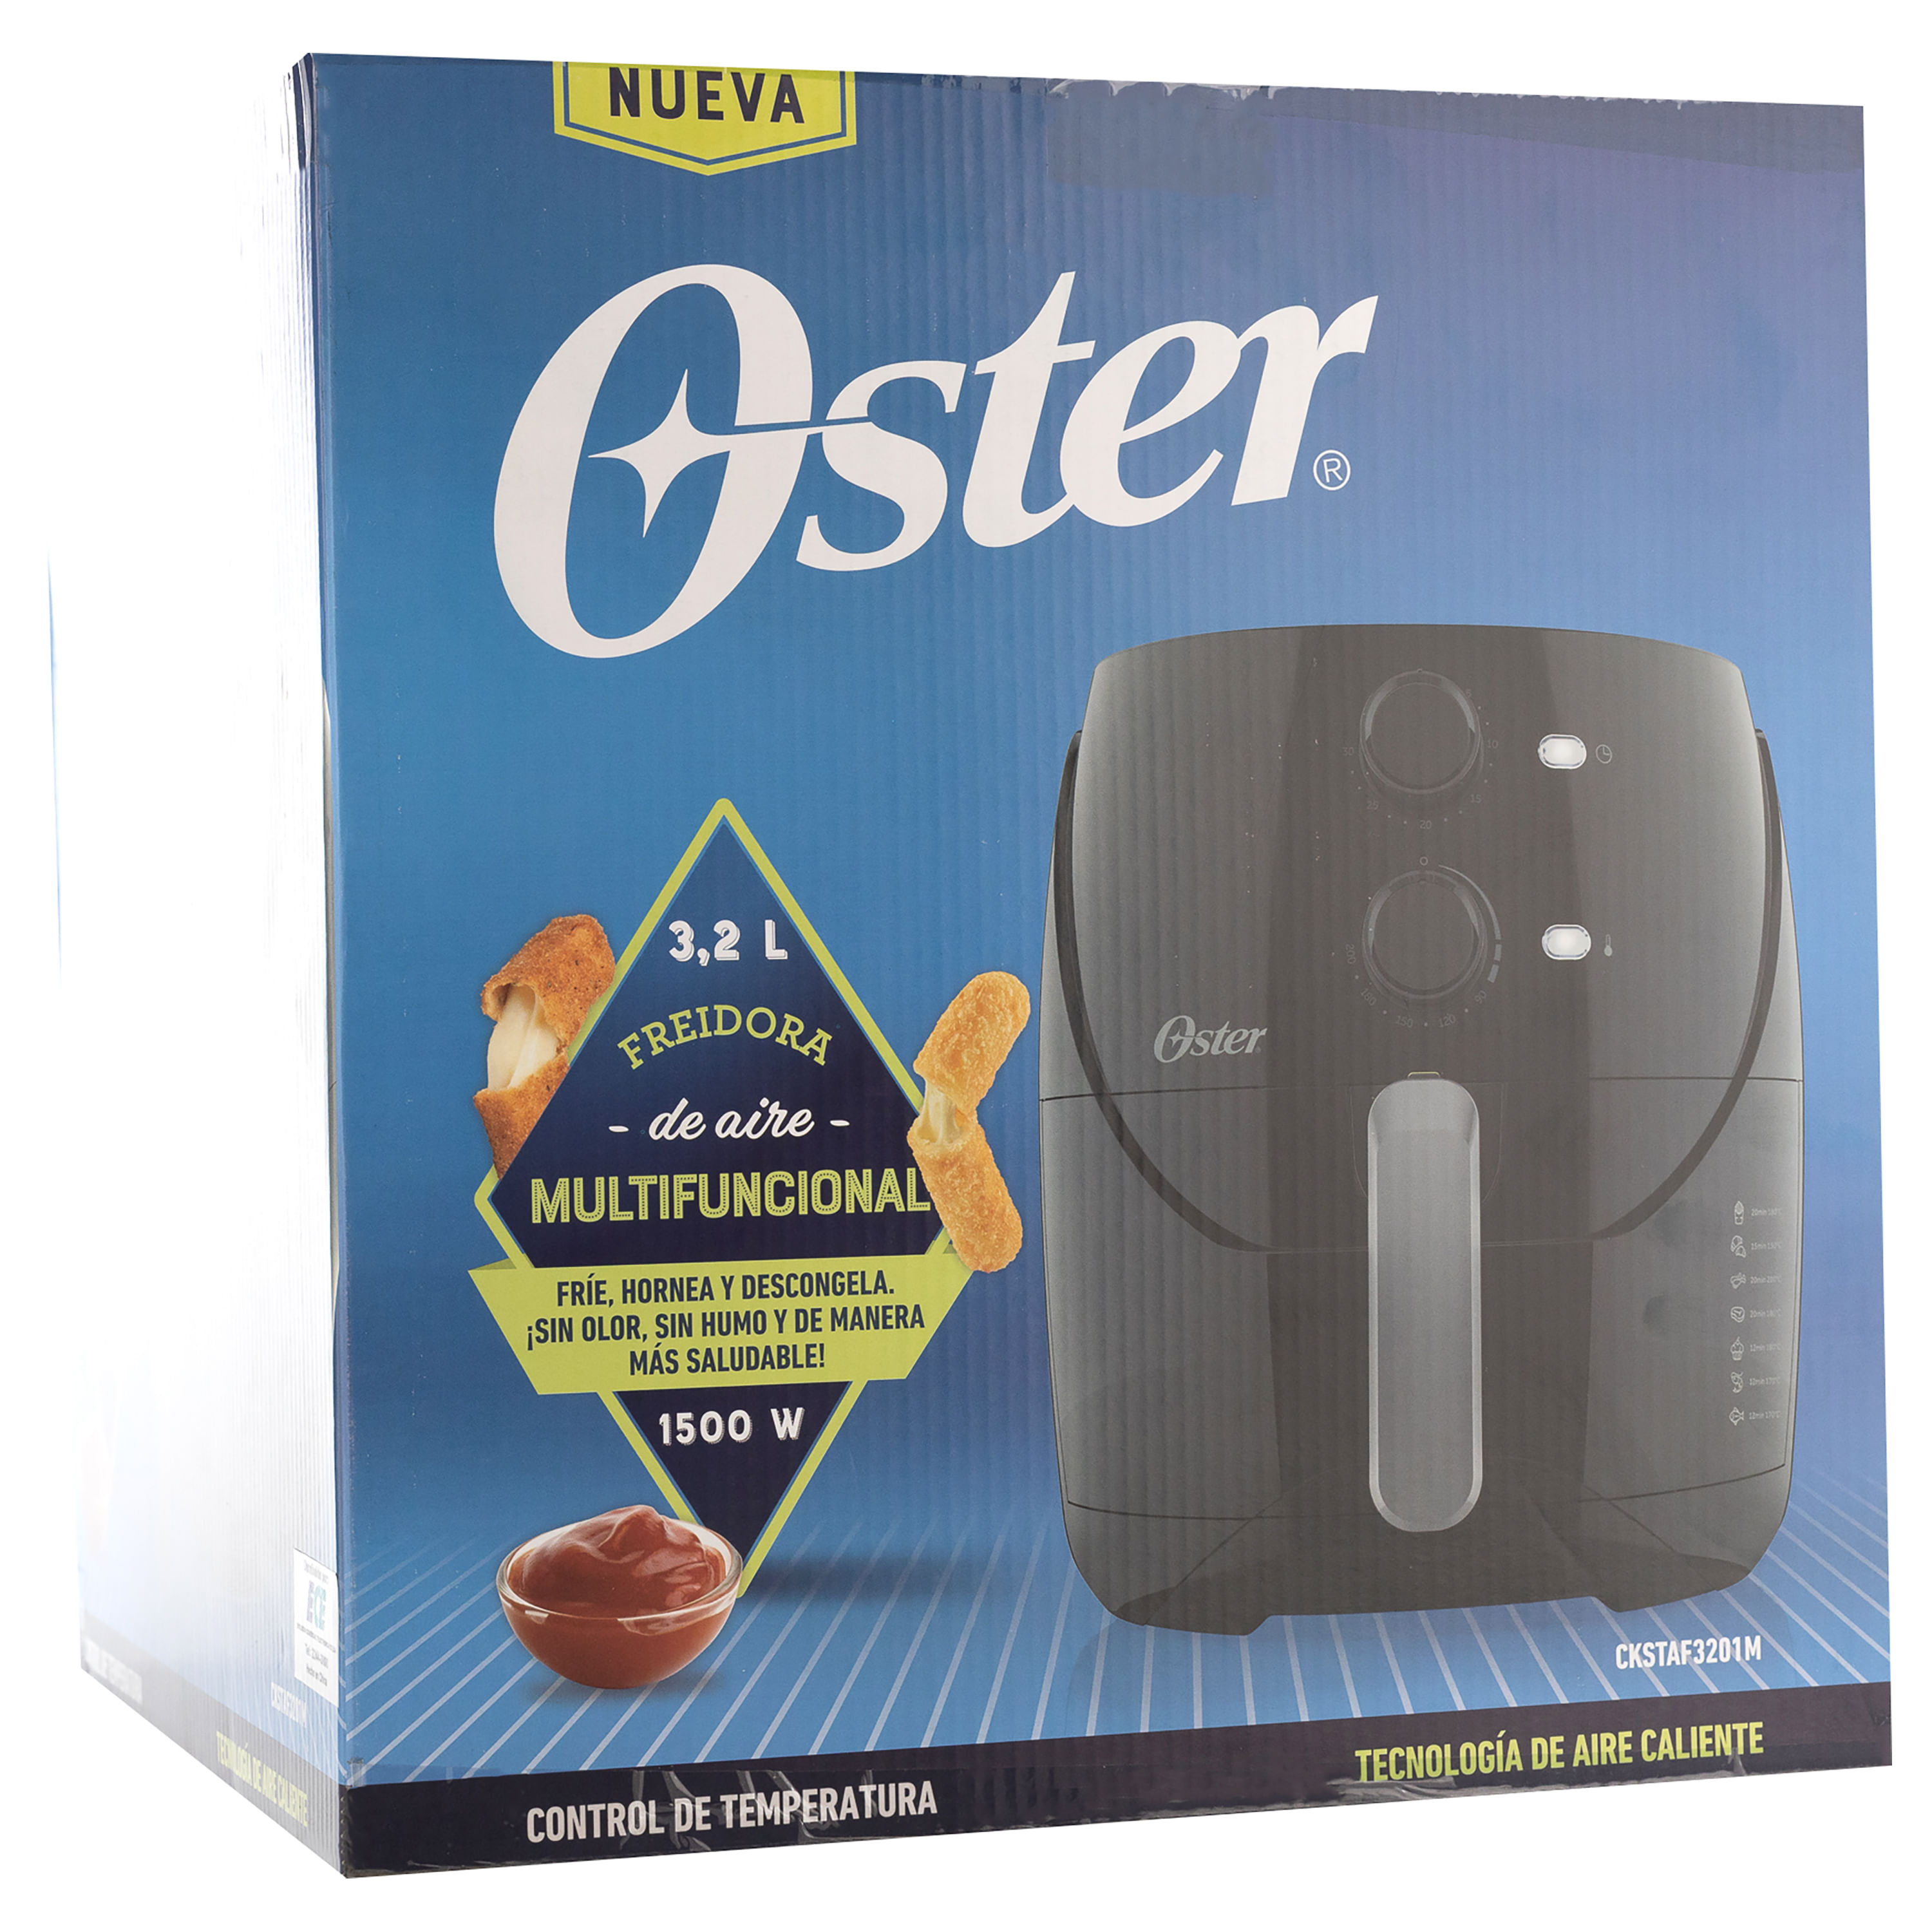 Freidora de aire Oster® multifuncional de 3.2 litros CKSTAF3201M 120V -  Oster